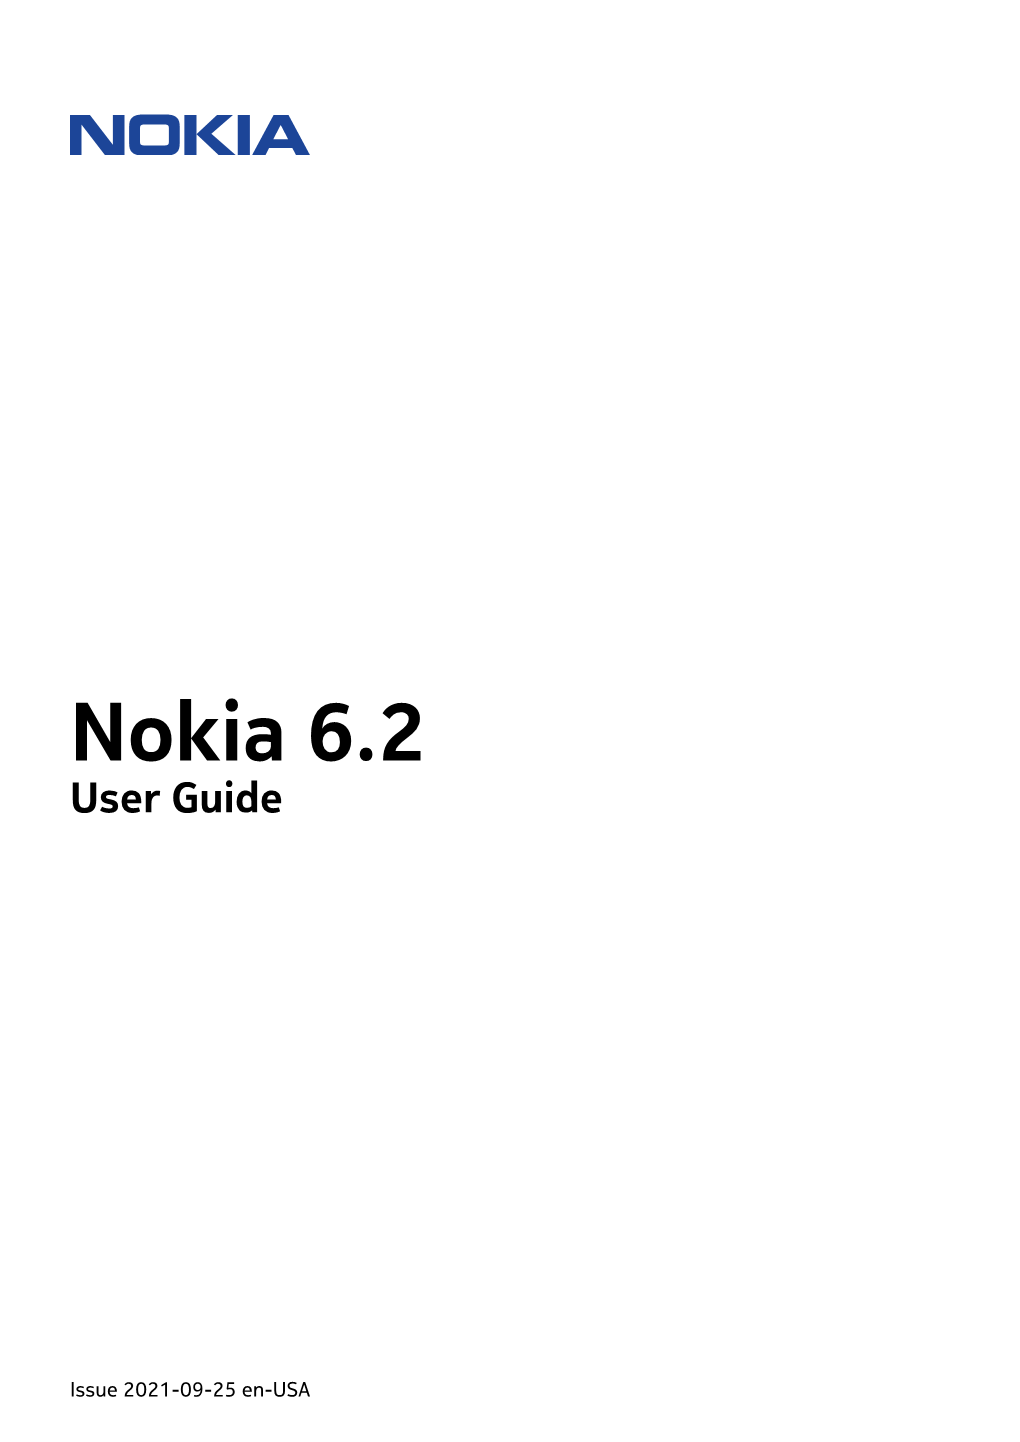 Nokia 6.2 User Guide